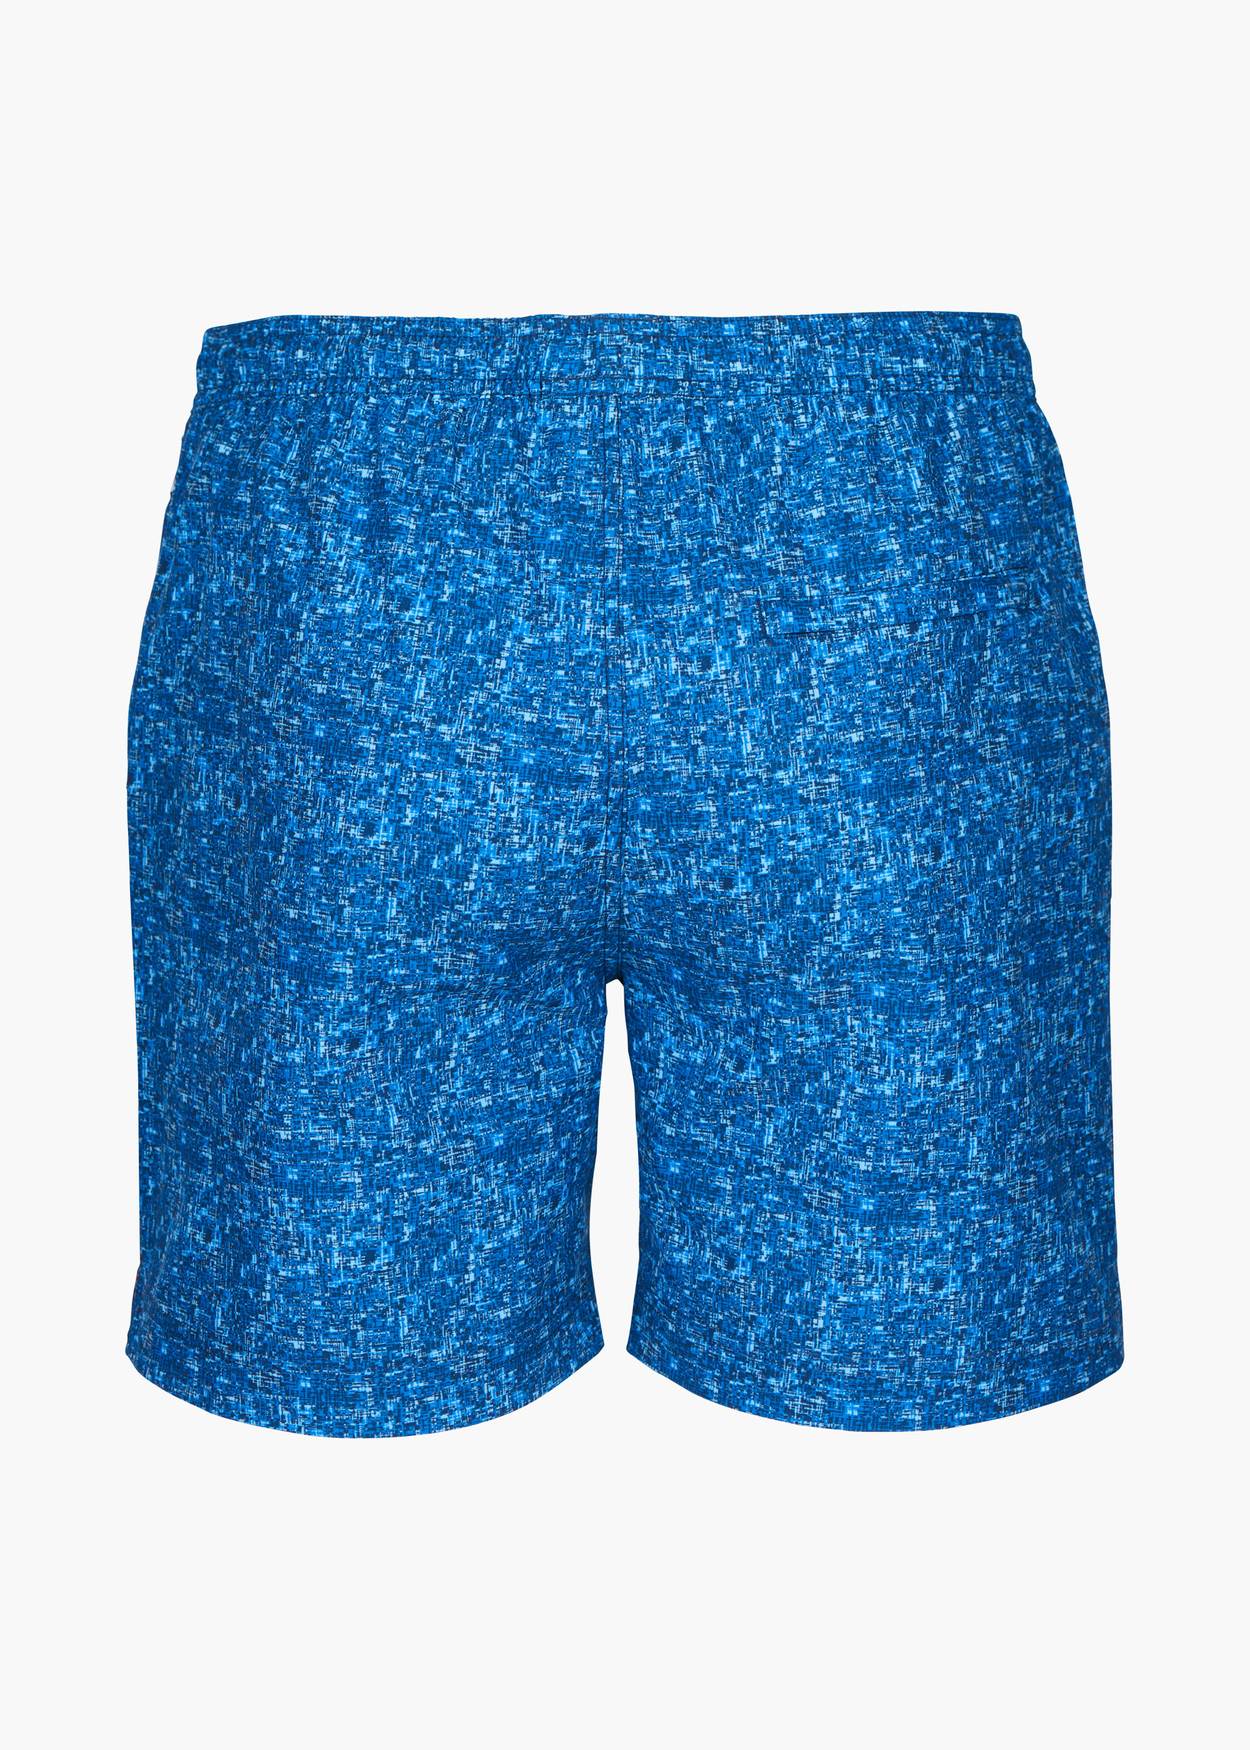 Ponza Swim Shorts